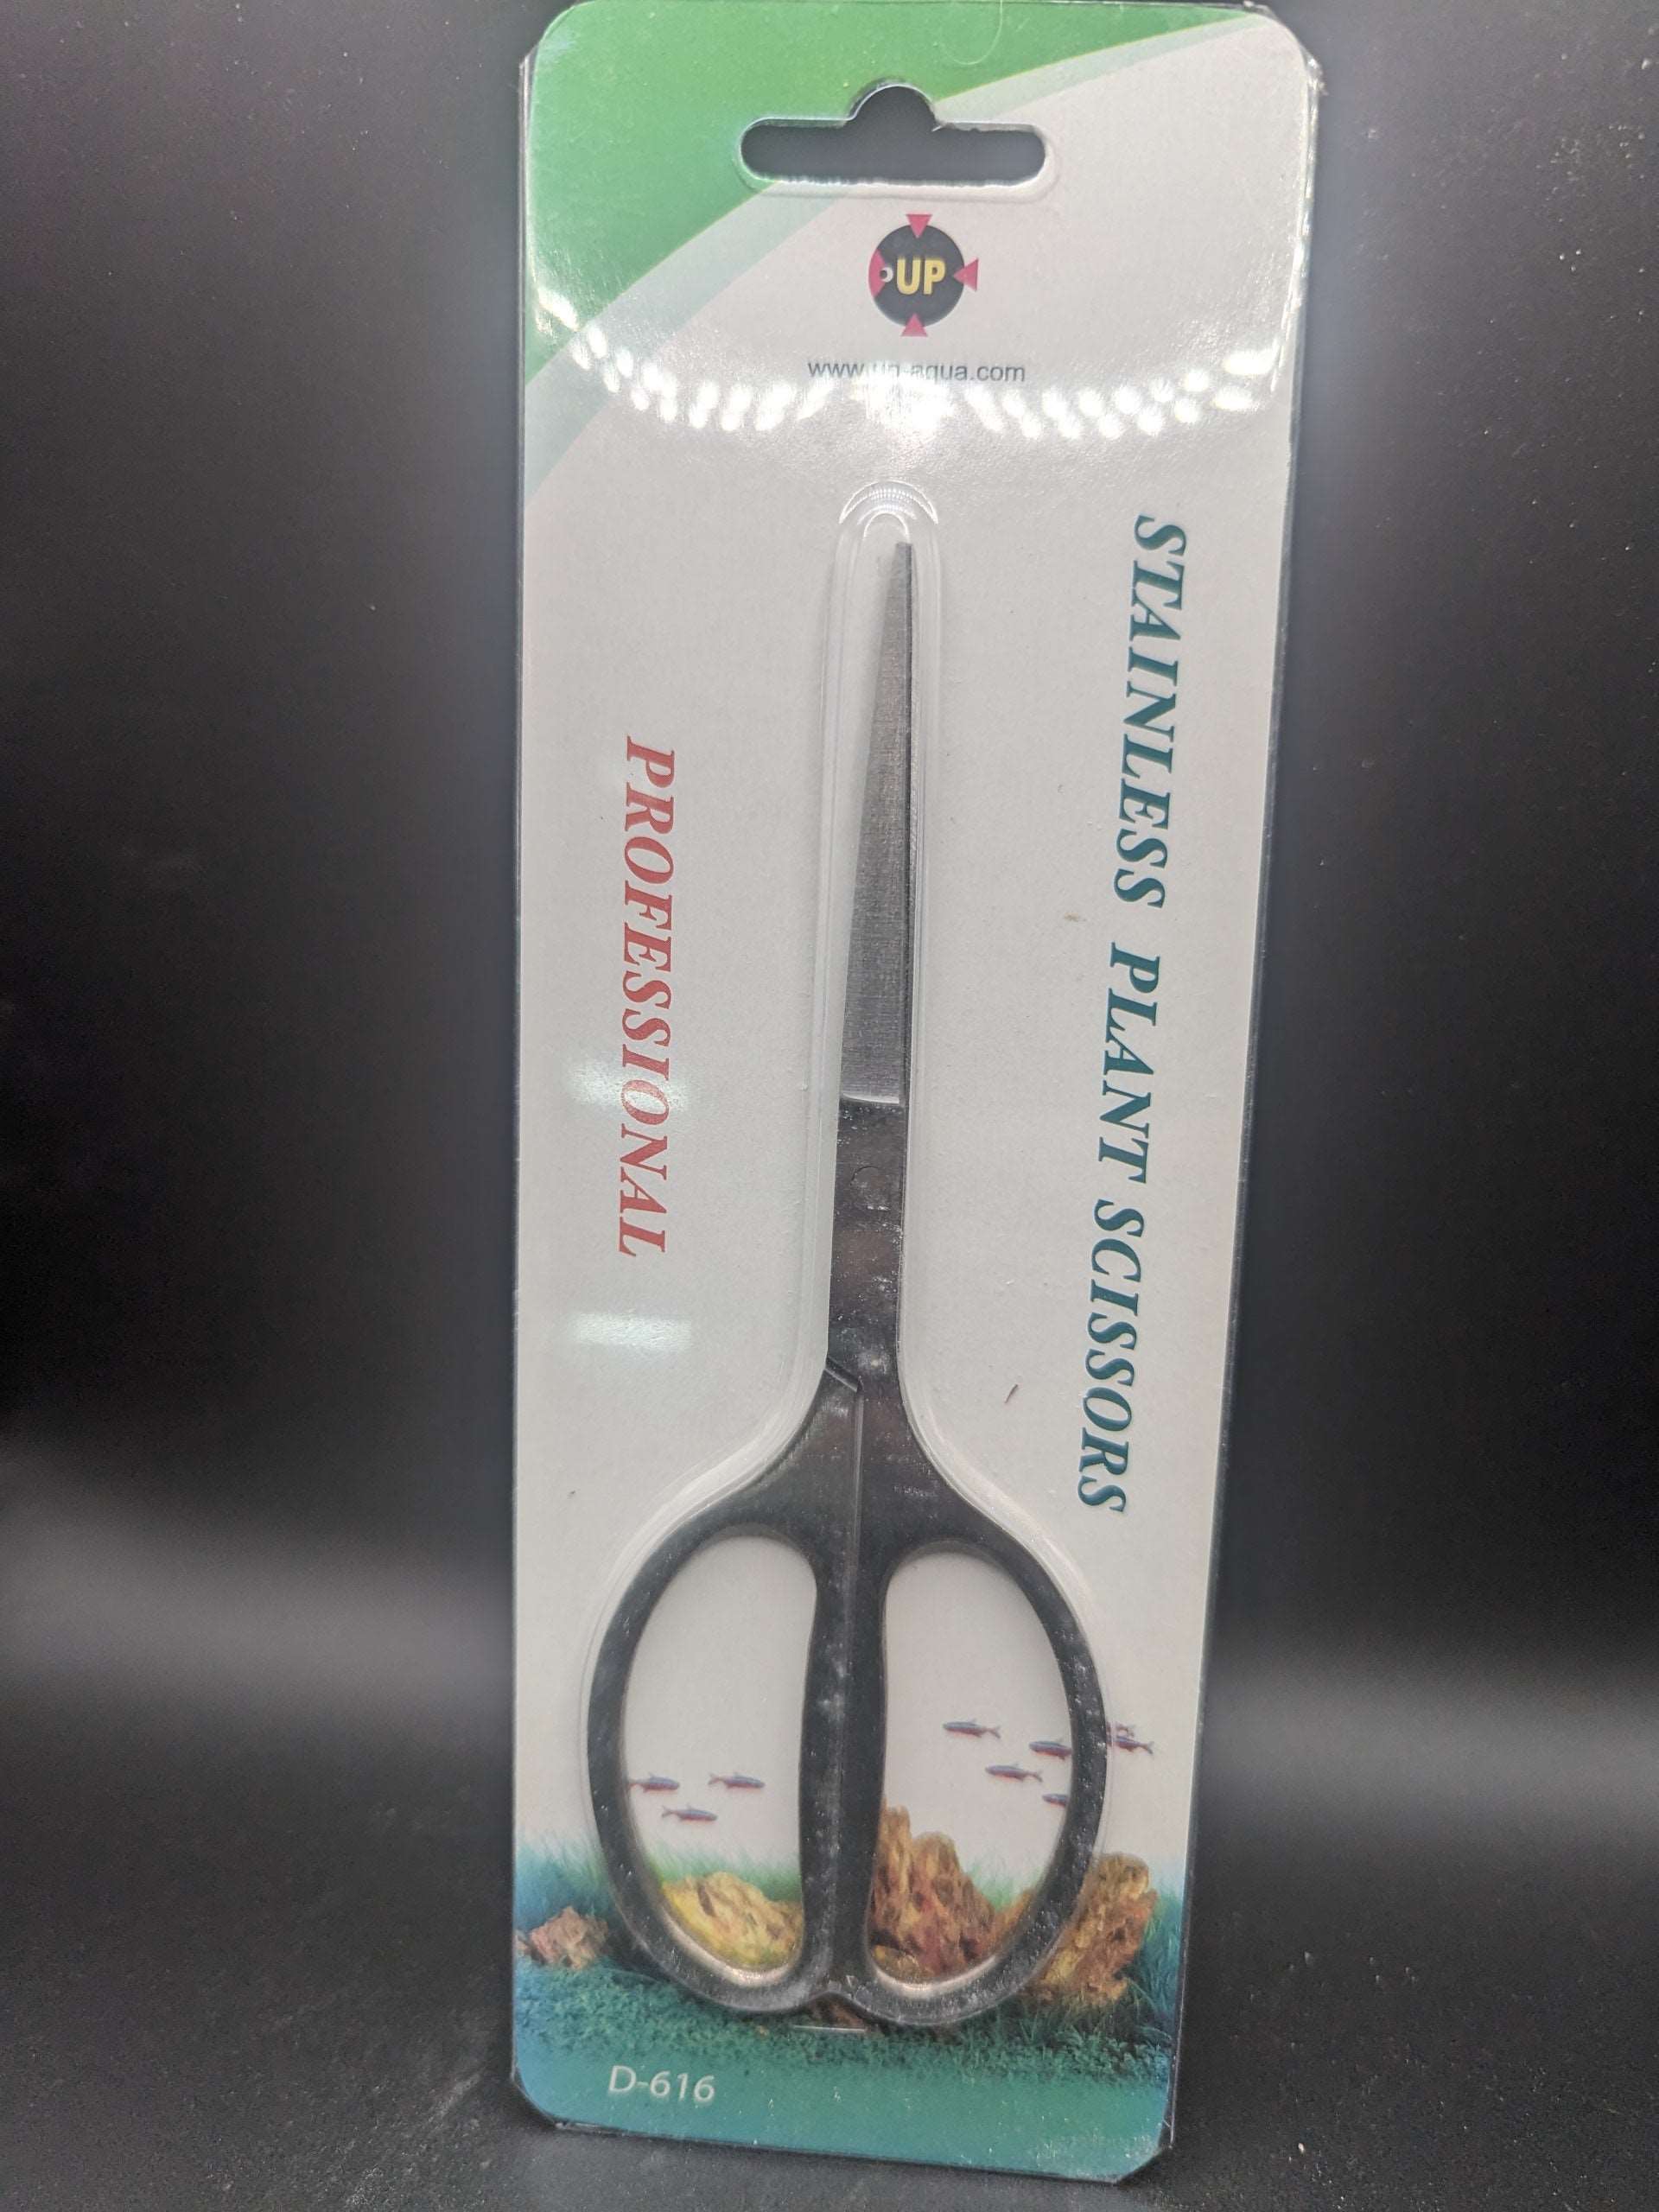 Up Aqua- stainless plant scissors